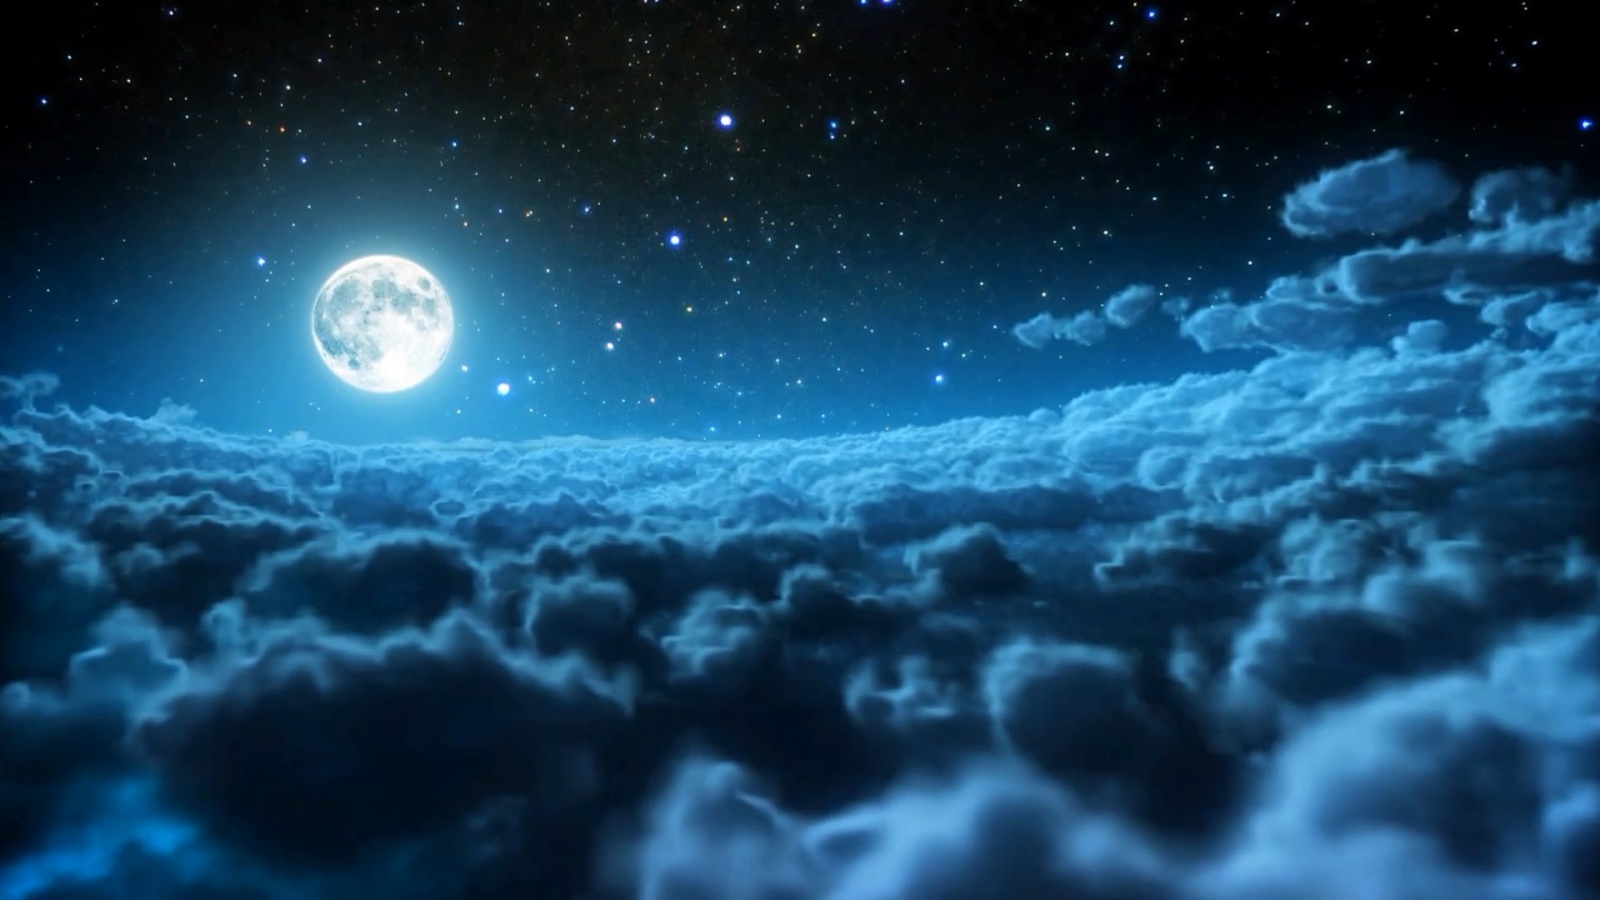 Moon and stars in the sky - Digital Art wallpaper | Moon and stars wallpaper,  Star wallpaper, Night sky stars